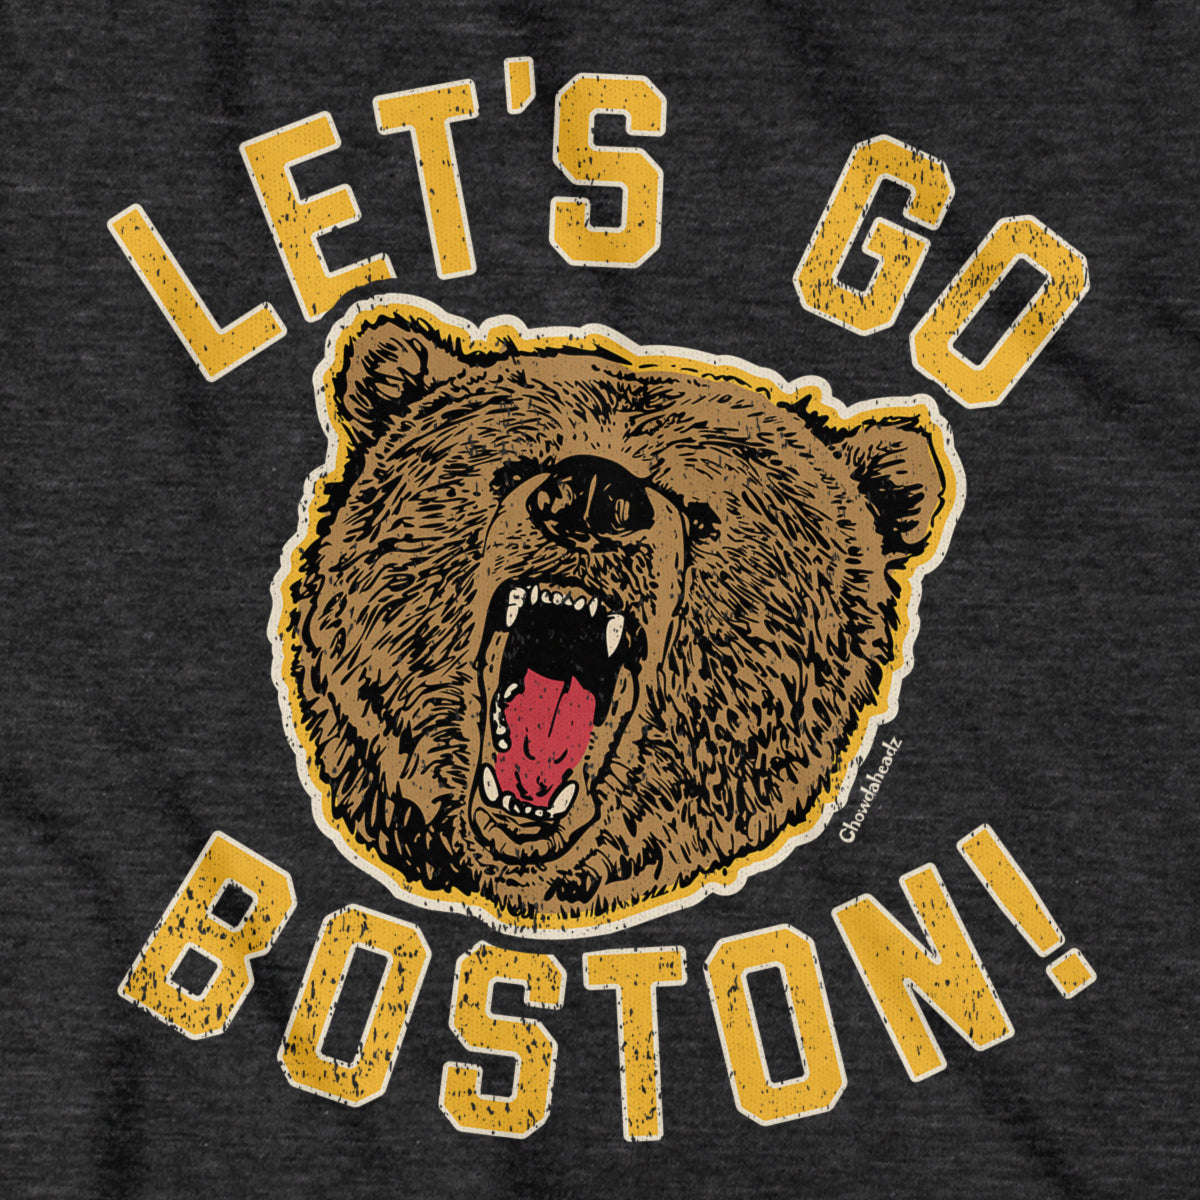 Let's Go Boston Bear T-Shirt - Chowdaheadz